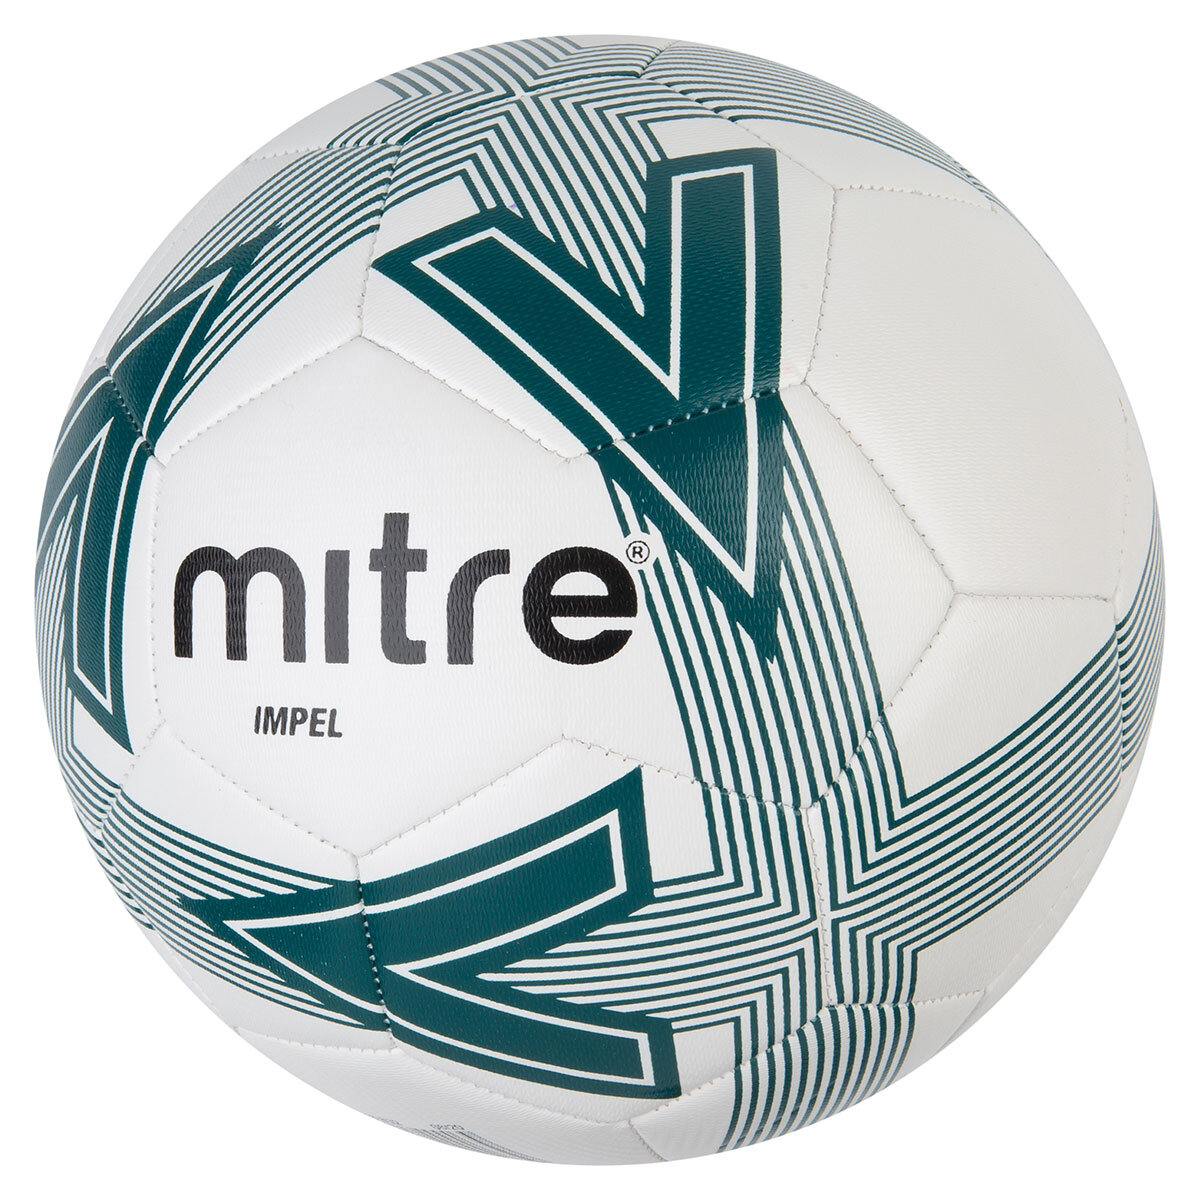 Mitre Training Revolve Foot Ball Match Soccer Game Grass Astra Football  Size 5